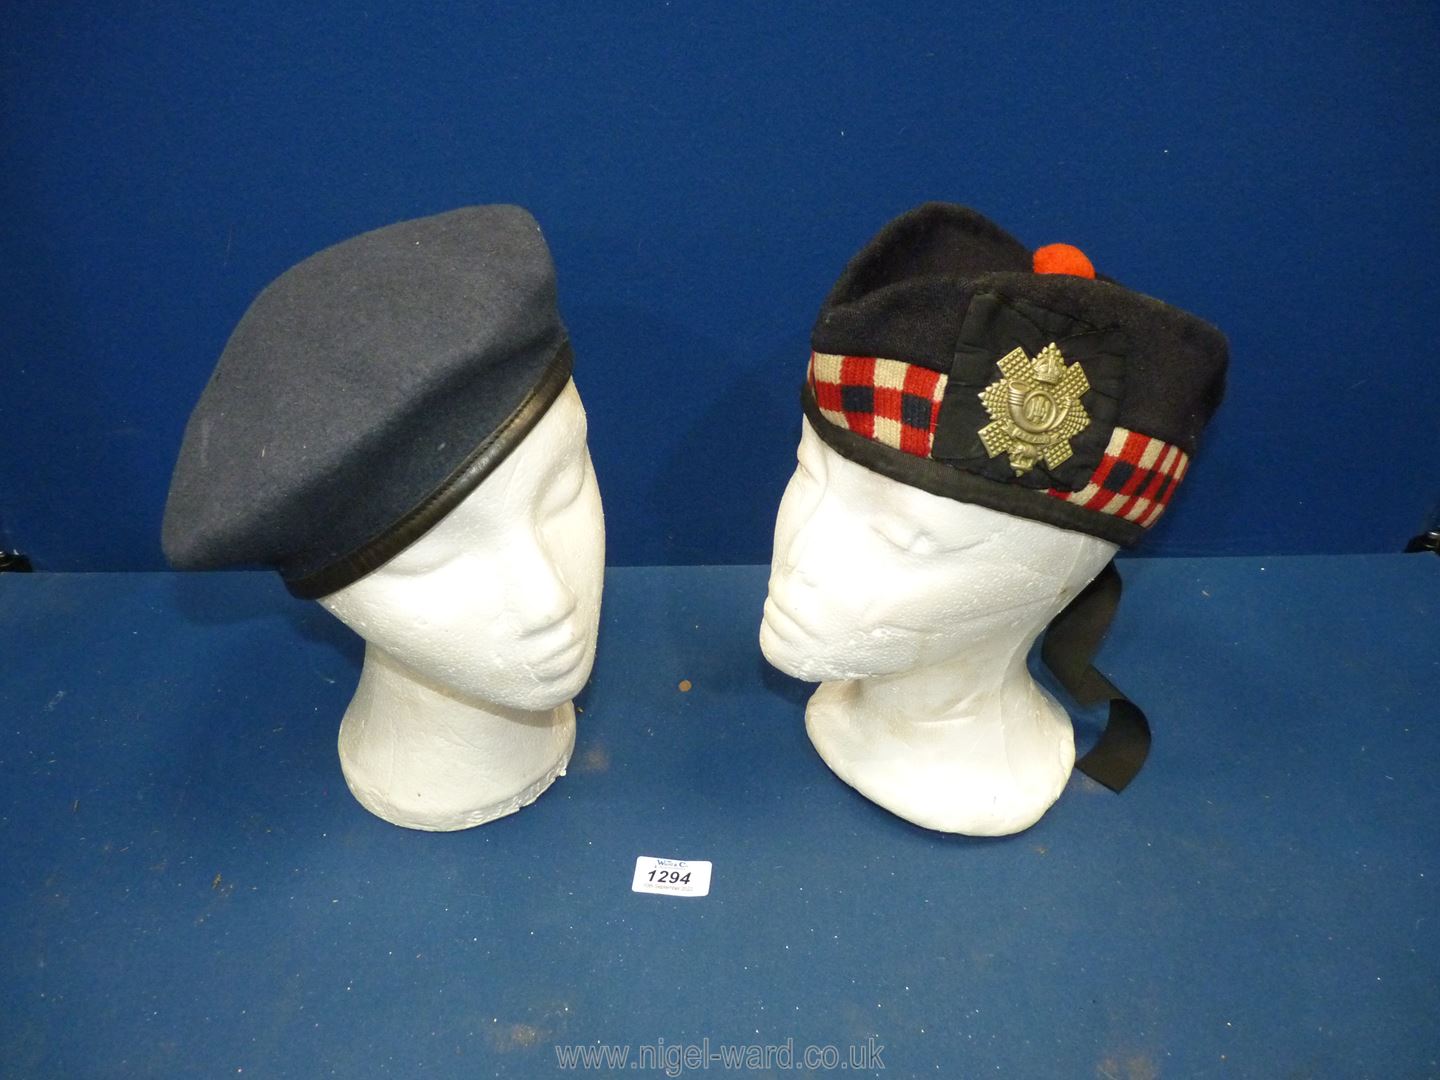 A 1944 Scottish military cap, plus a navy blue felt beret.